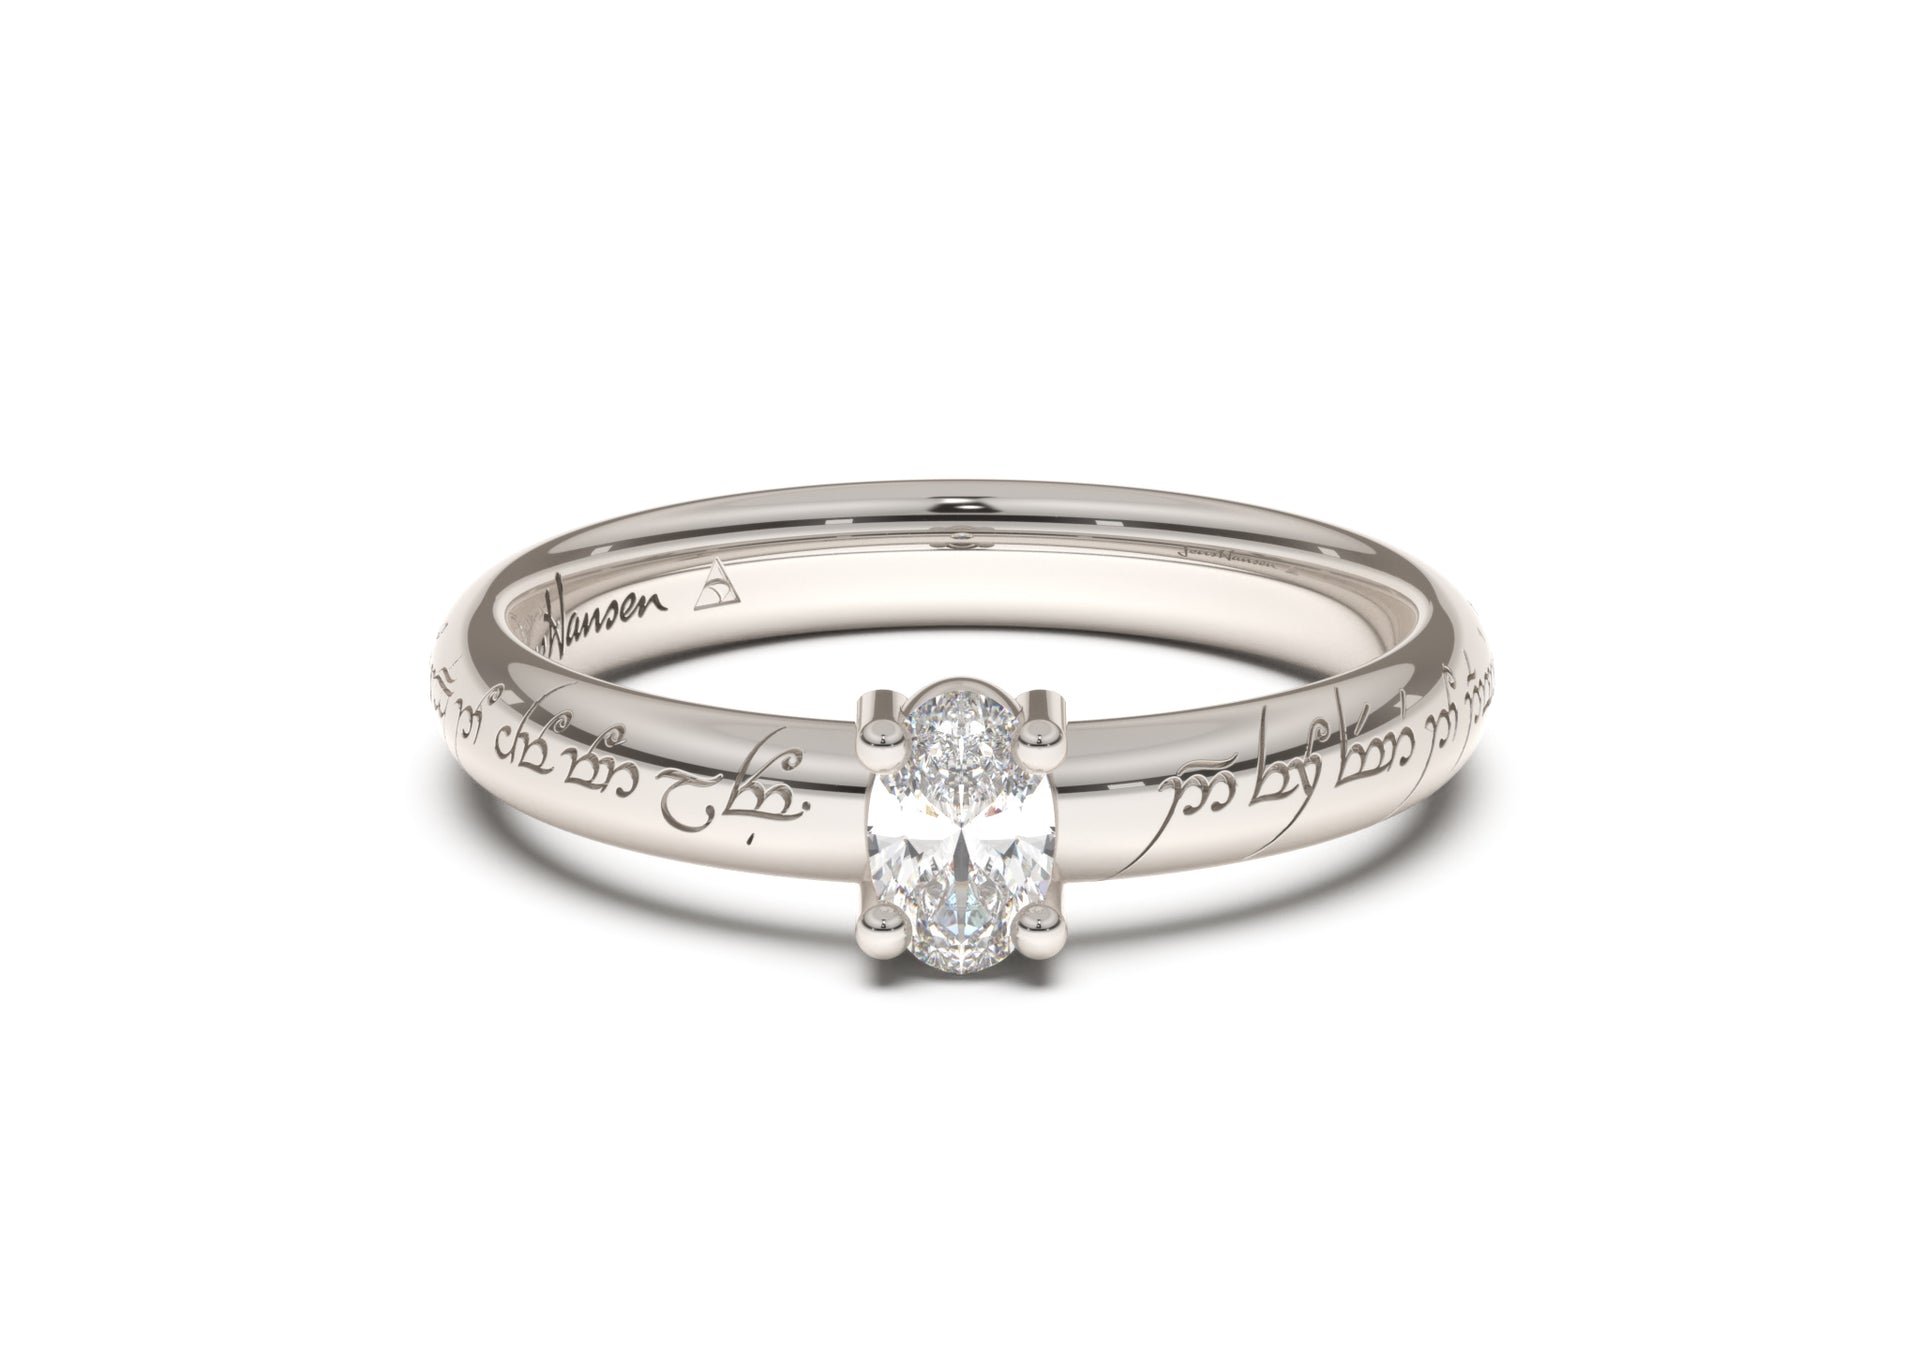 Oval Contemporary Slim Elvish Engagement Ring, White Gold & Platinum